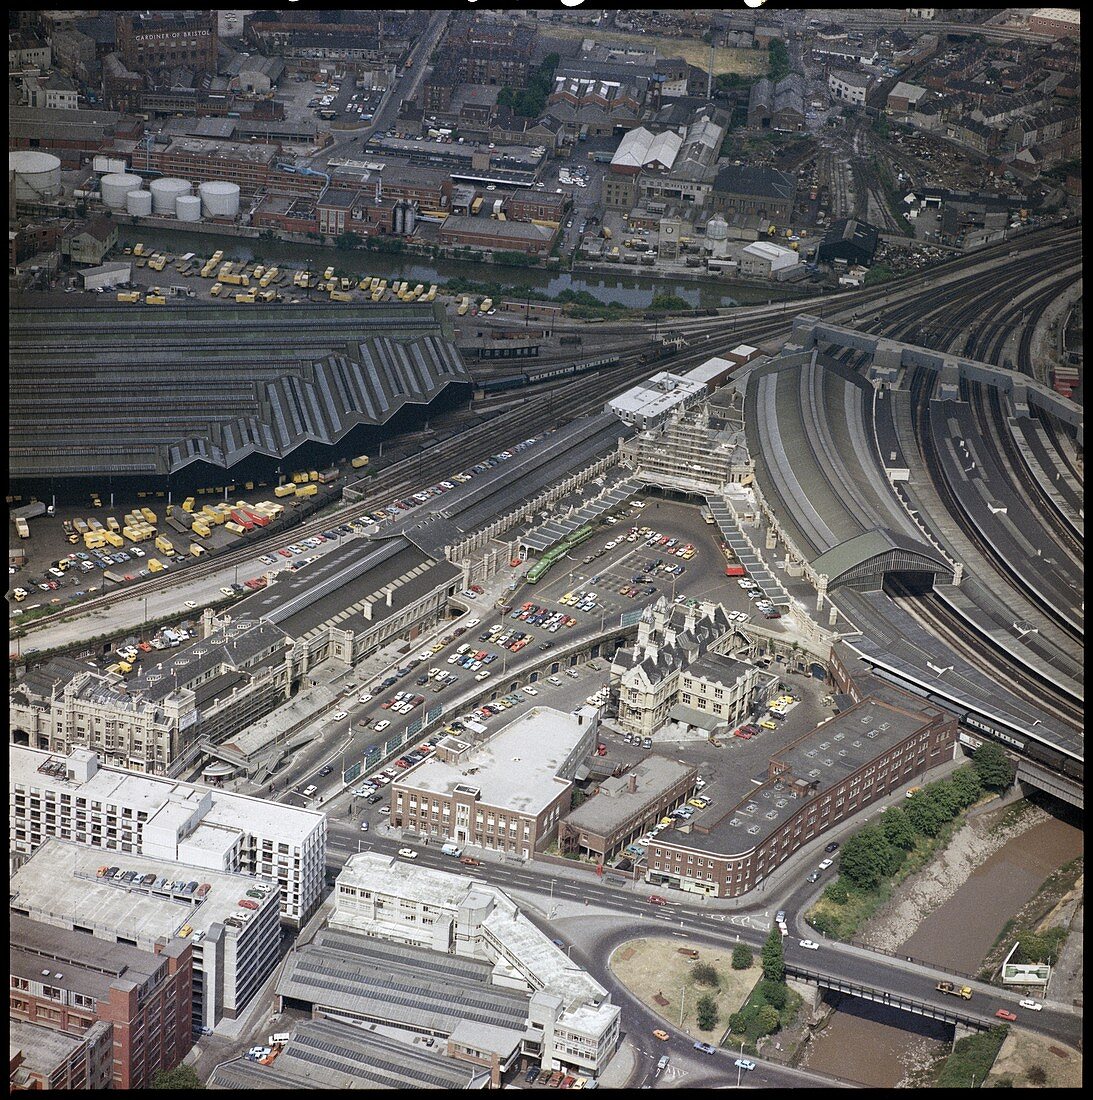 Temple Meads Railway Station, Bristol, UK, 1975